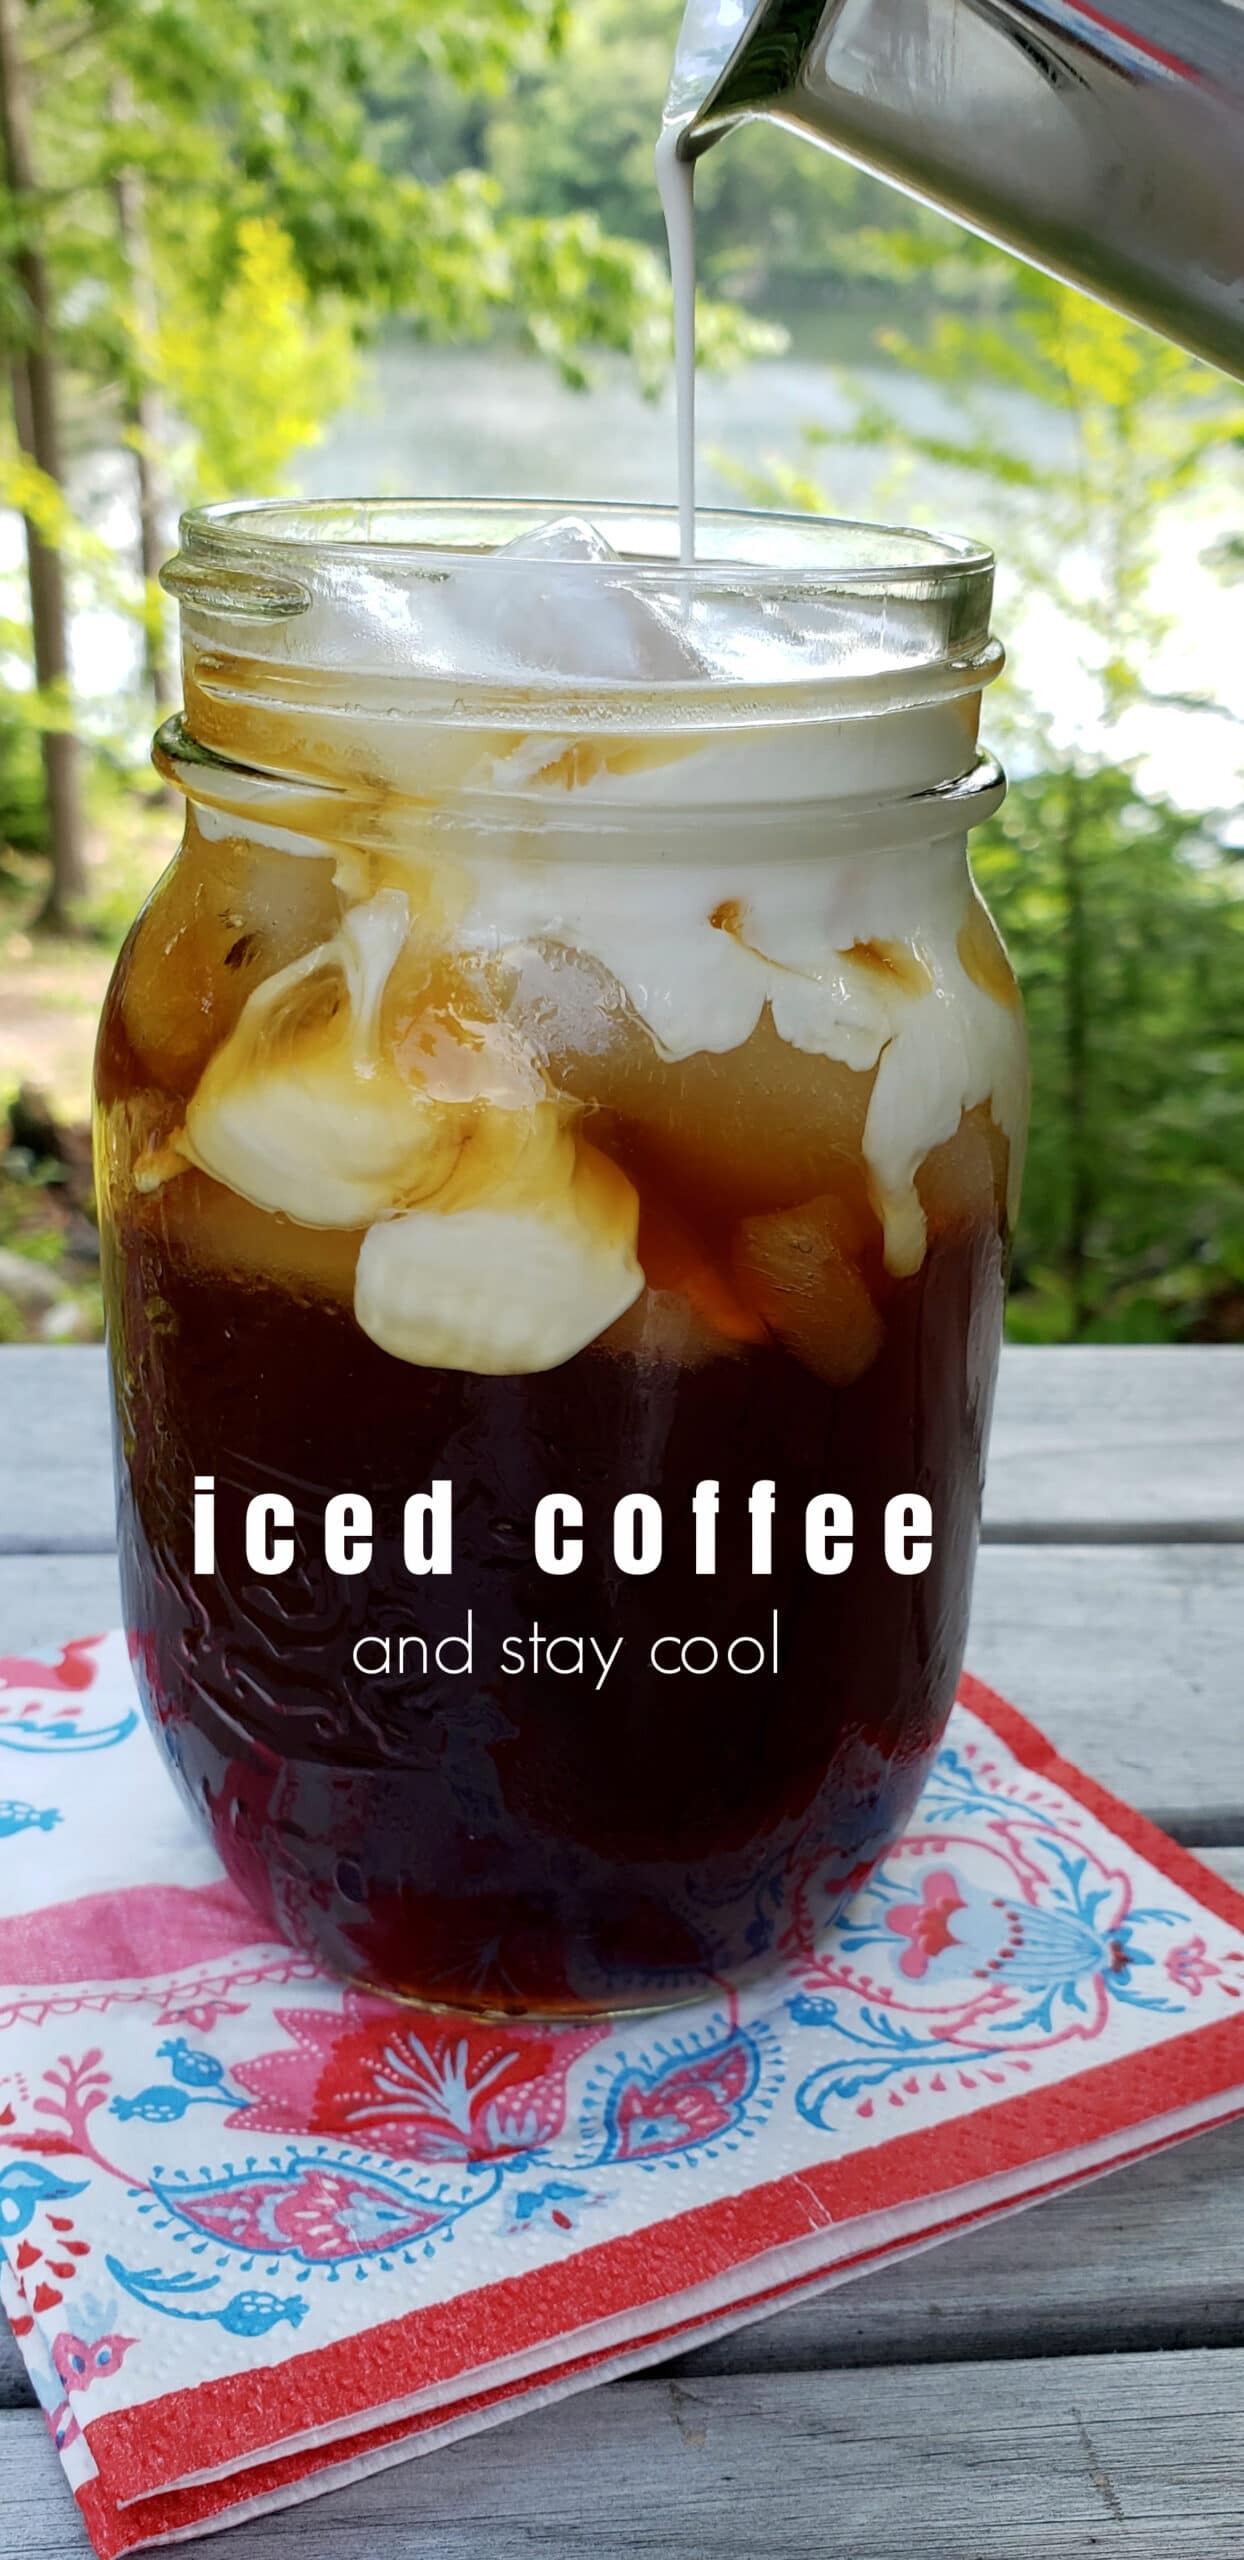 Mason Jar Cold-Brewed Coffee Recipe: Stay Home, Stay Warm & Make  Cold-Brewed Coffee, Beverages